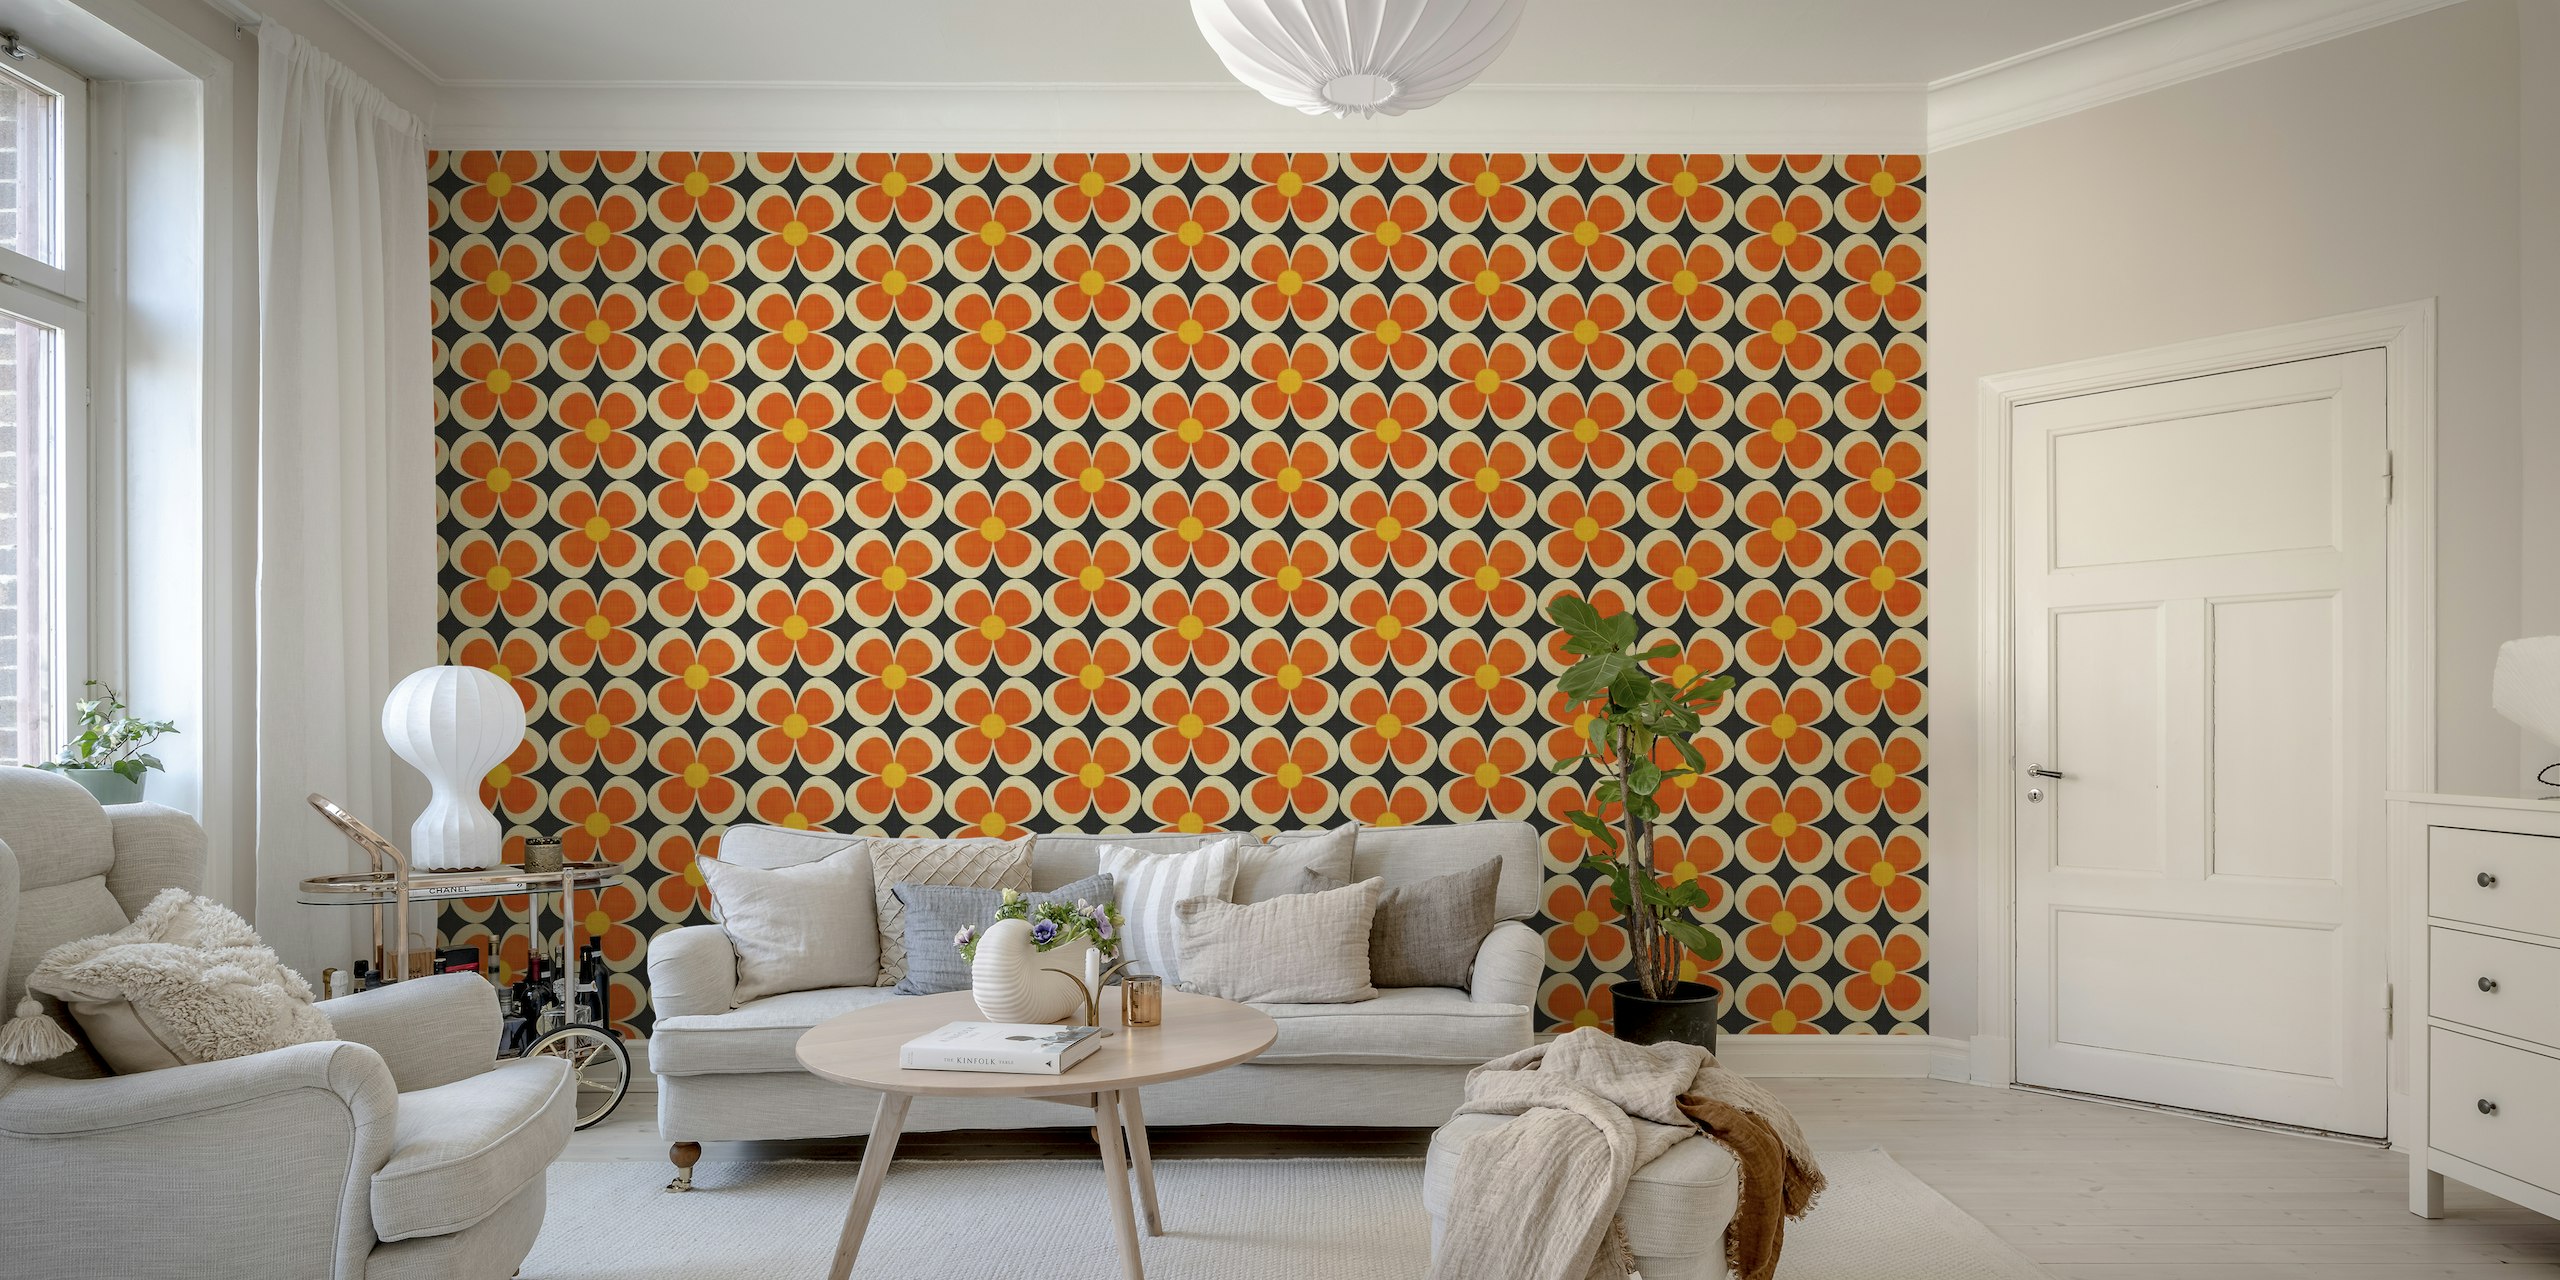 Retro-inspireret groovy geometrisk blomstret vægmaleri i orange og brune toner